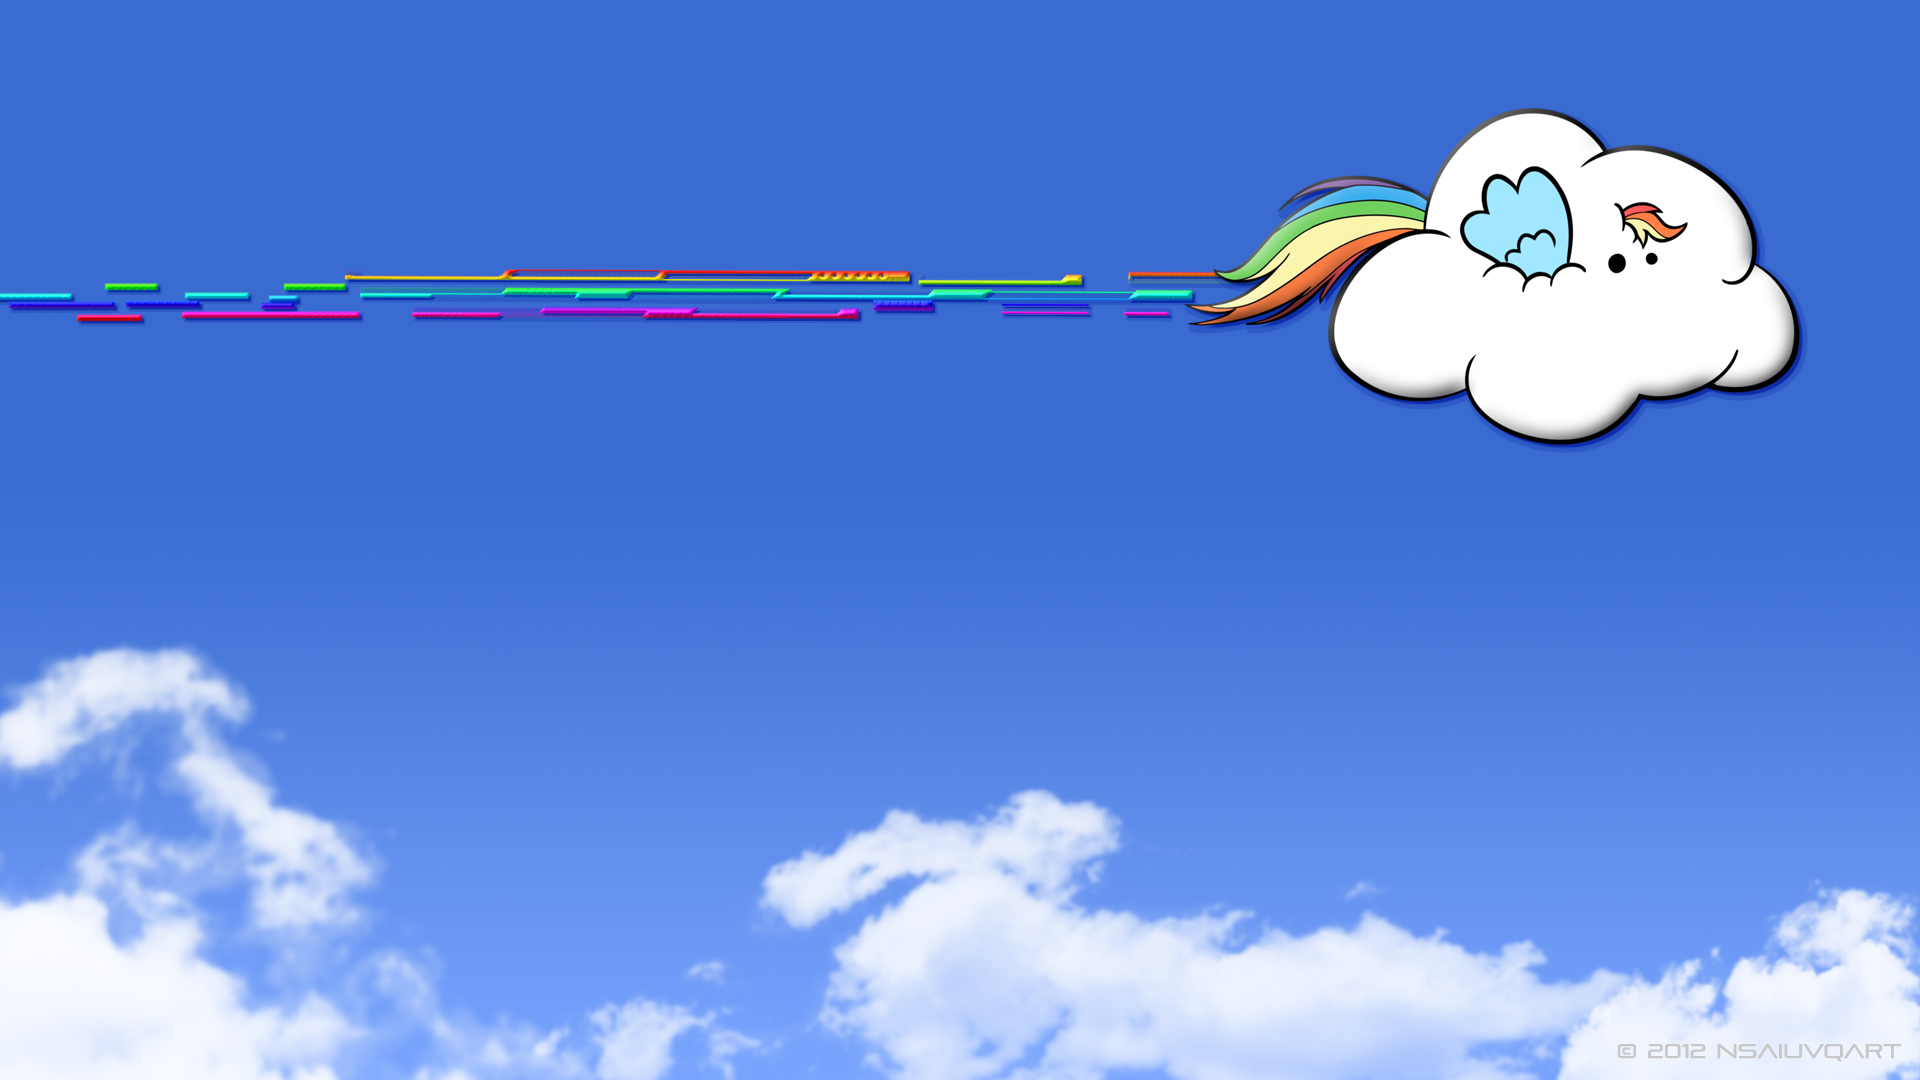 Rainbow Dash - Freedom WP by MR-1, nsaiuvqart and redheadstock